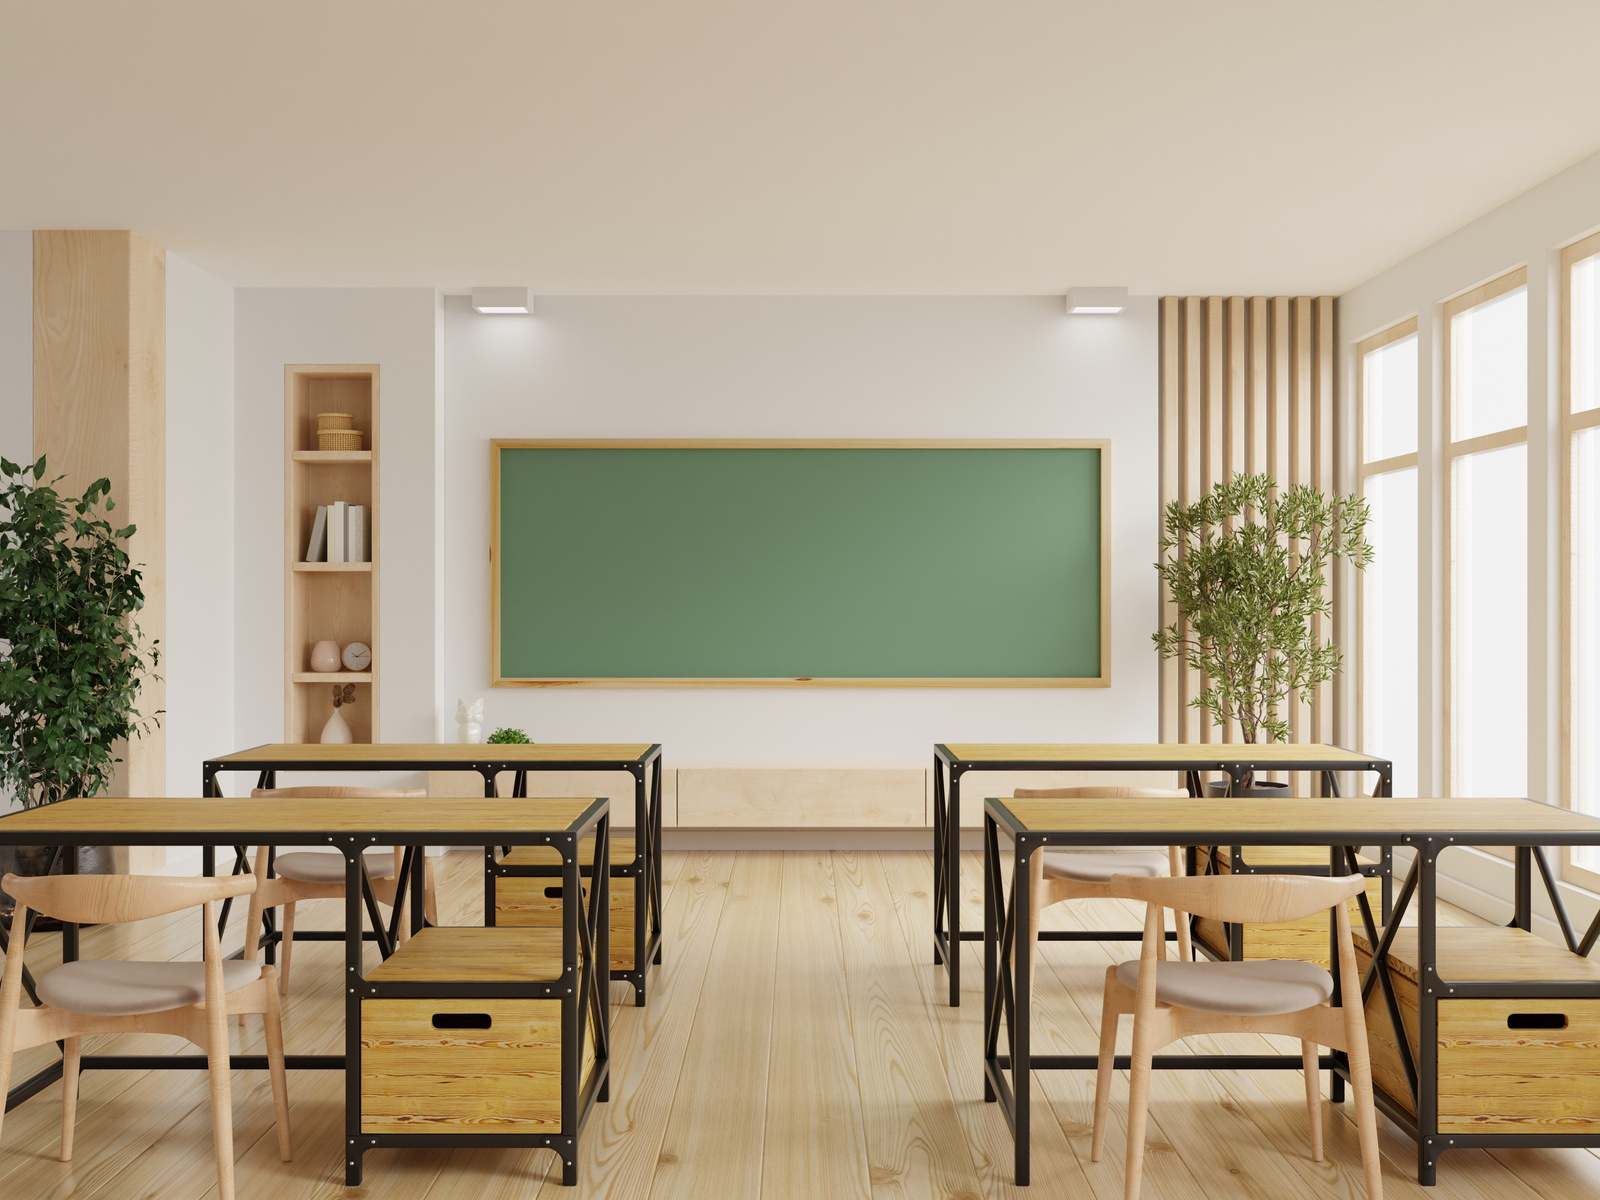 Classroom with school desks and greenboard,empty school clas